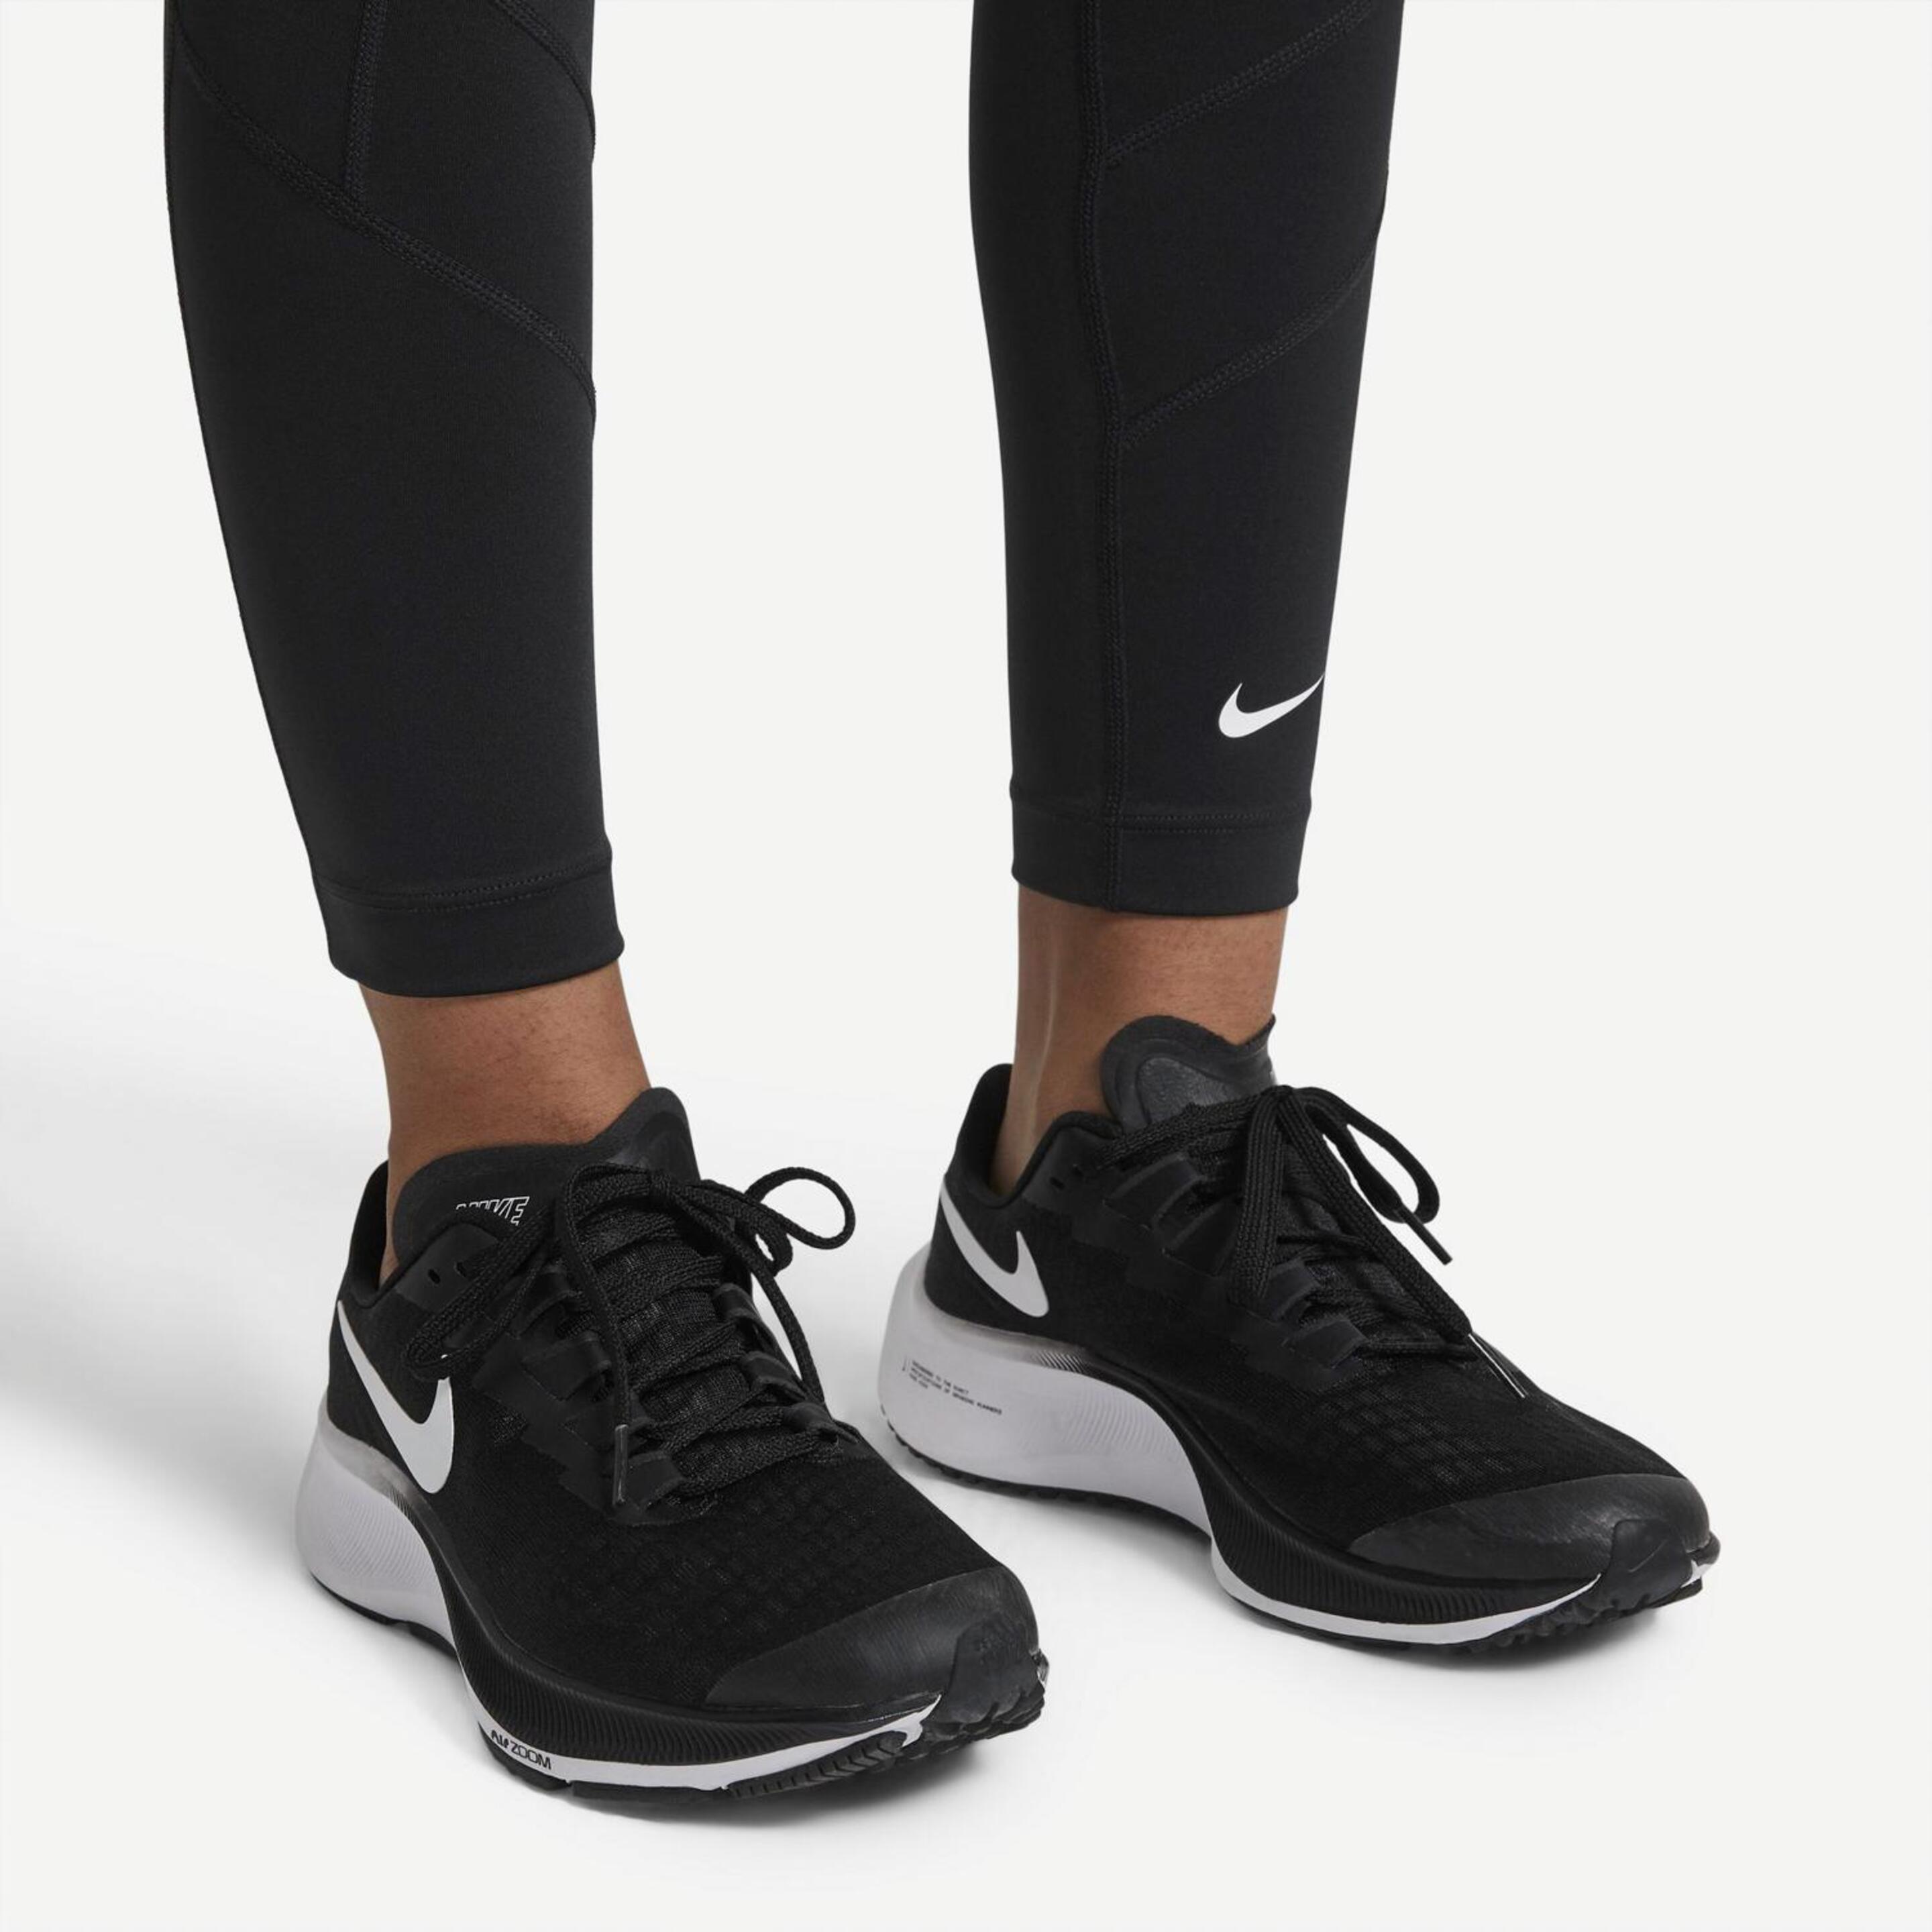 Leggings Nike One